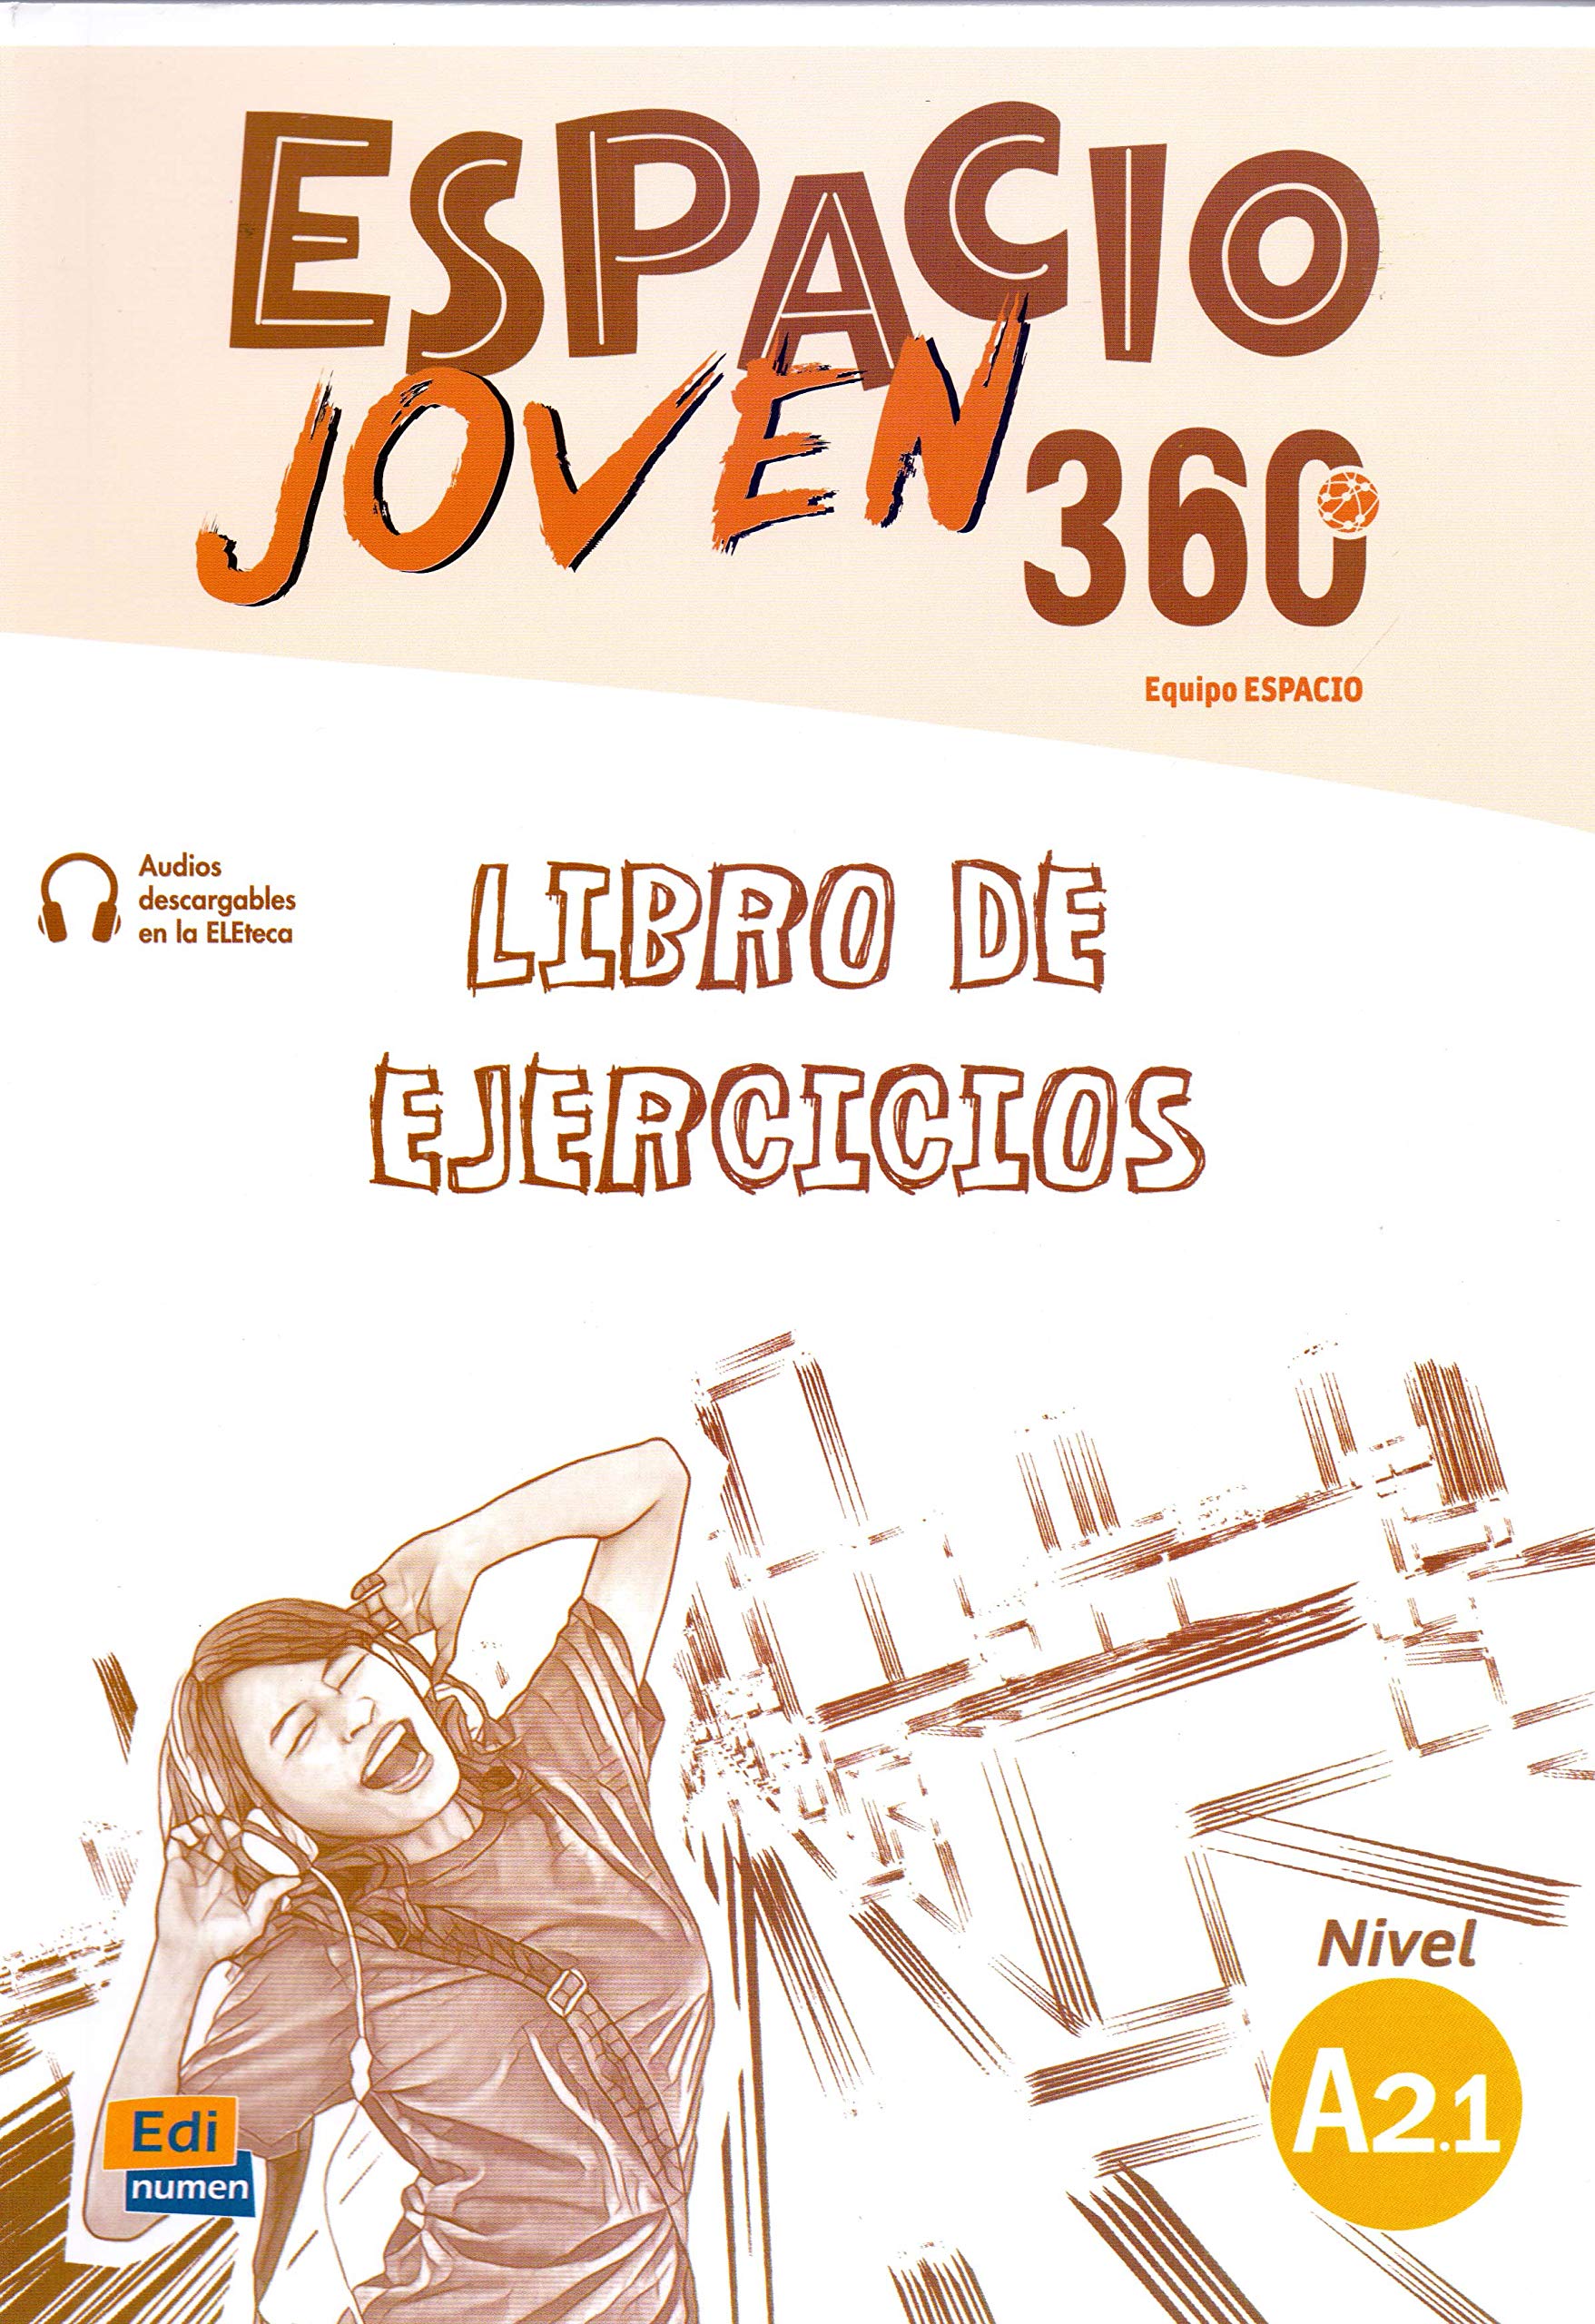 ESPACIO JOVEN 360 Nivel A 2.1 Libro de ejercicios